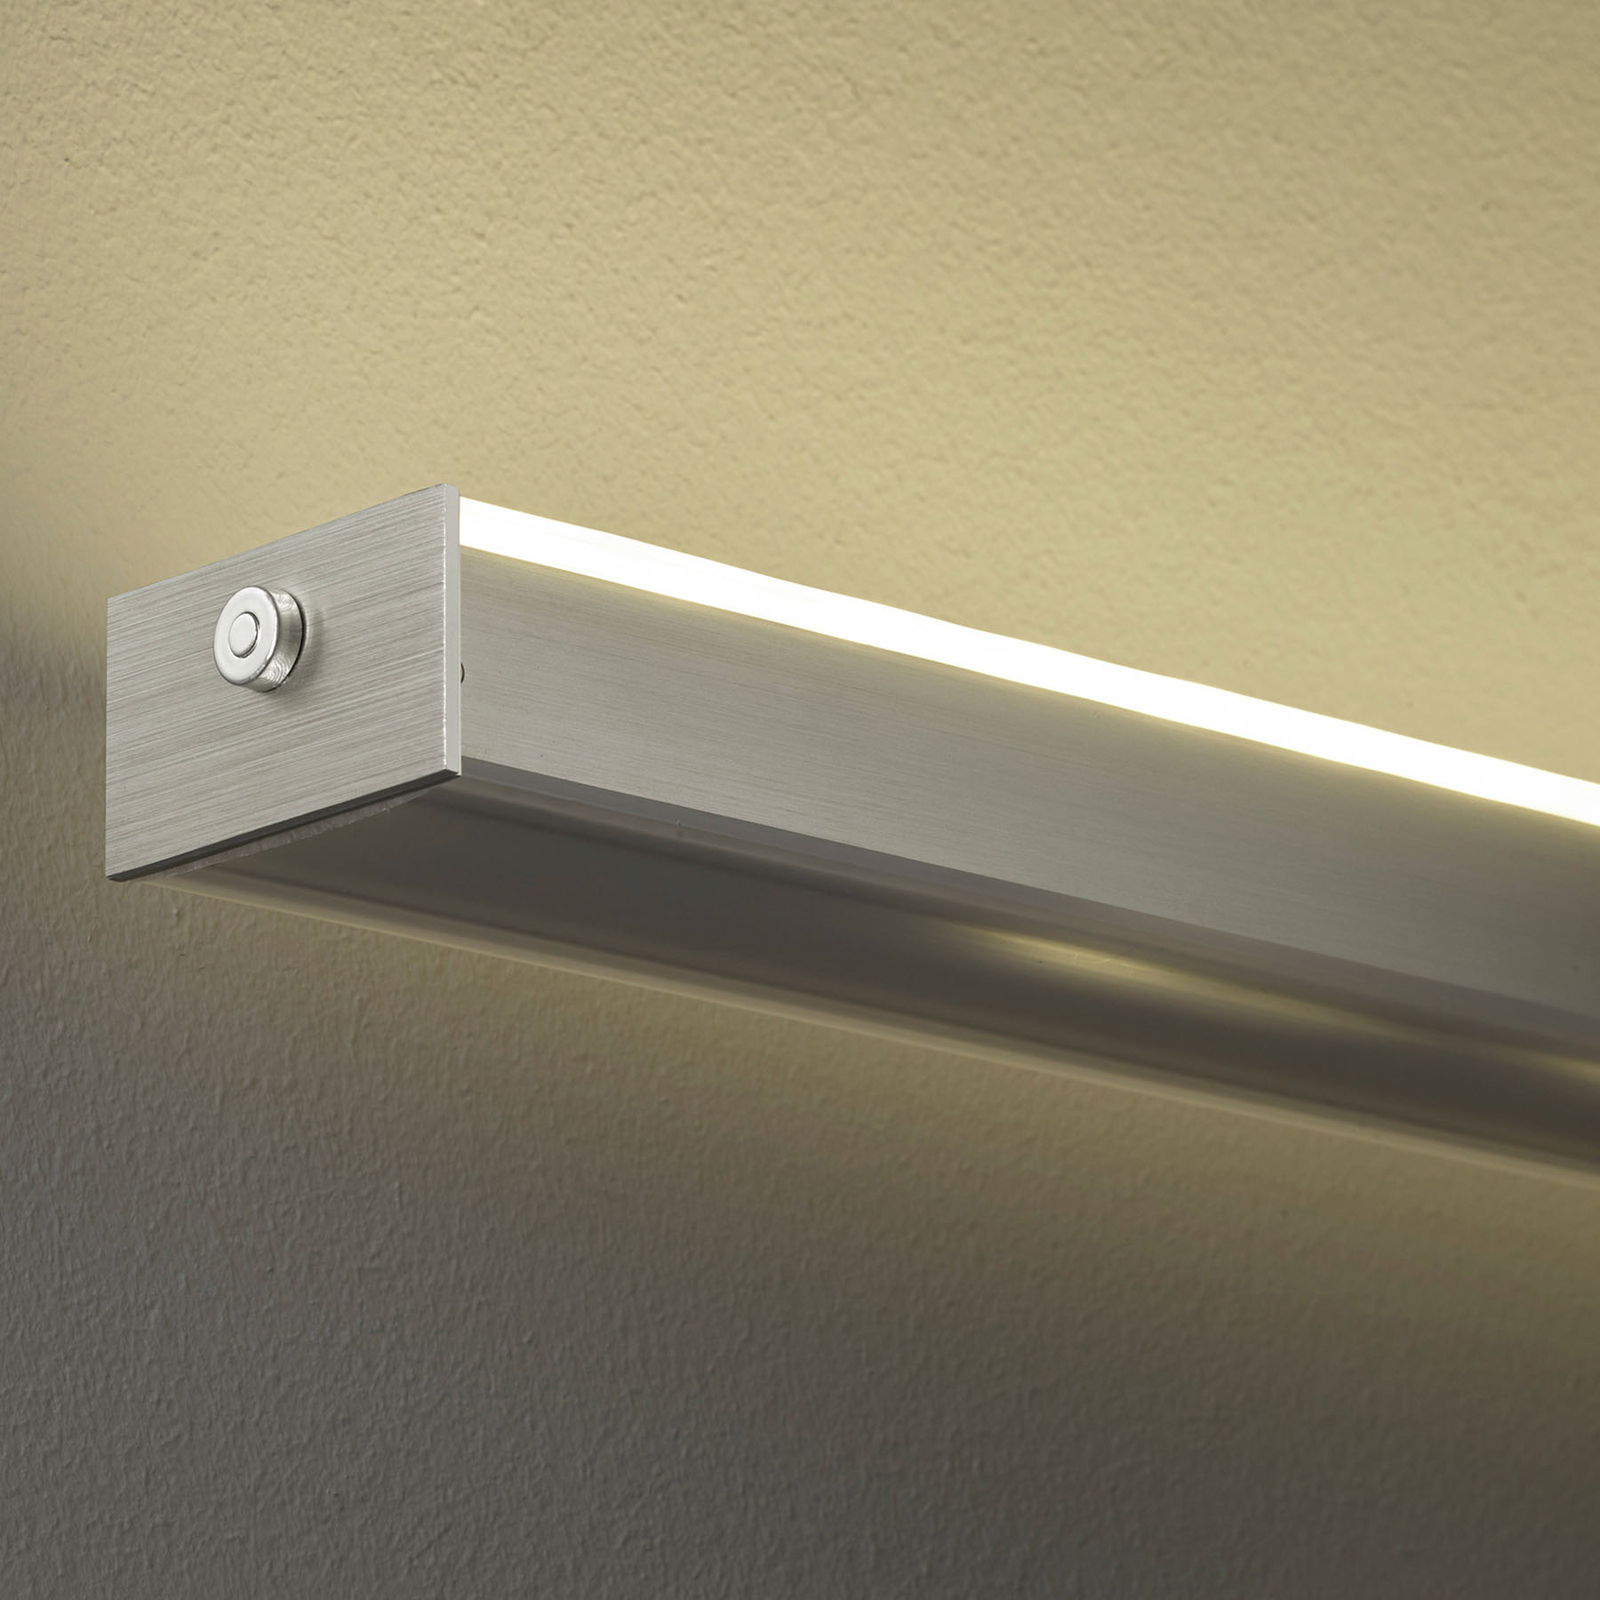 LED-riippuvalaisin Vitan TW, harmaa, pituus 150 cm